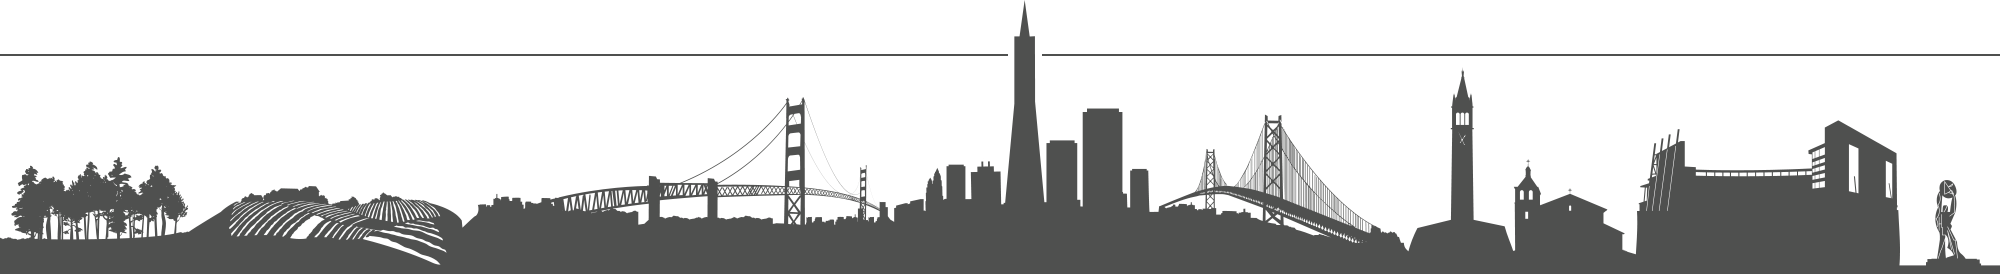 San Francisco Skyline Logo - Super Bowl City presented by Verizon - Super Bowl 50